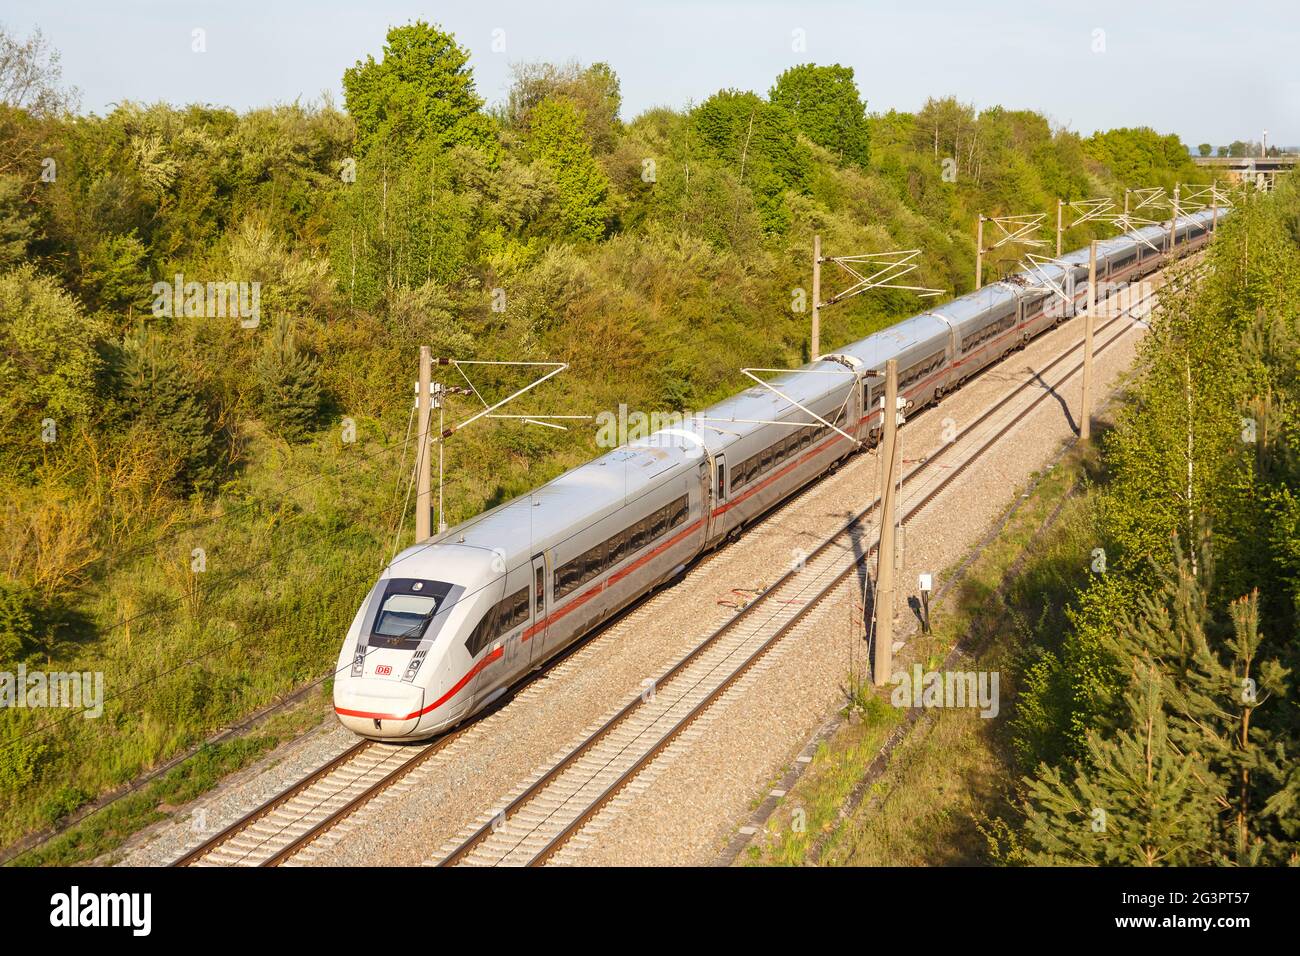 Stuttgart, Germany - May 9, 2021: ICE 4 Deutsche Bahn DB high-speed train railway line Mannheim-Stuttgart in Germany. Stock Photo